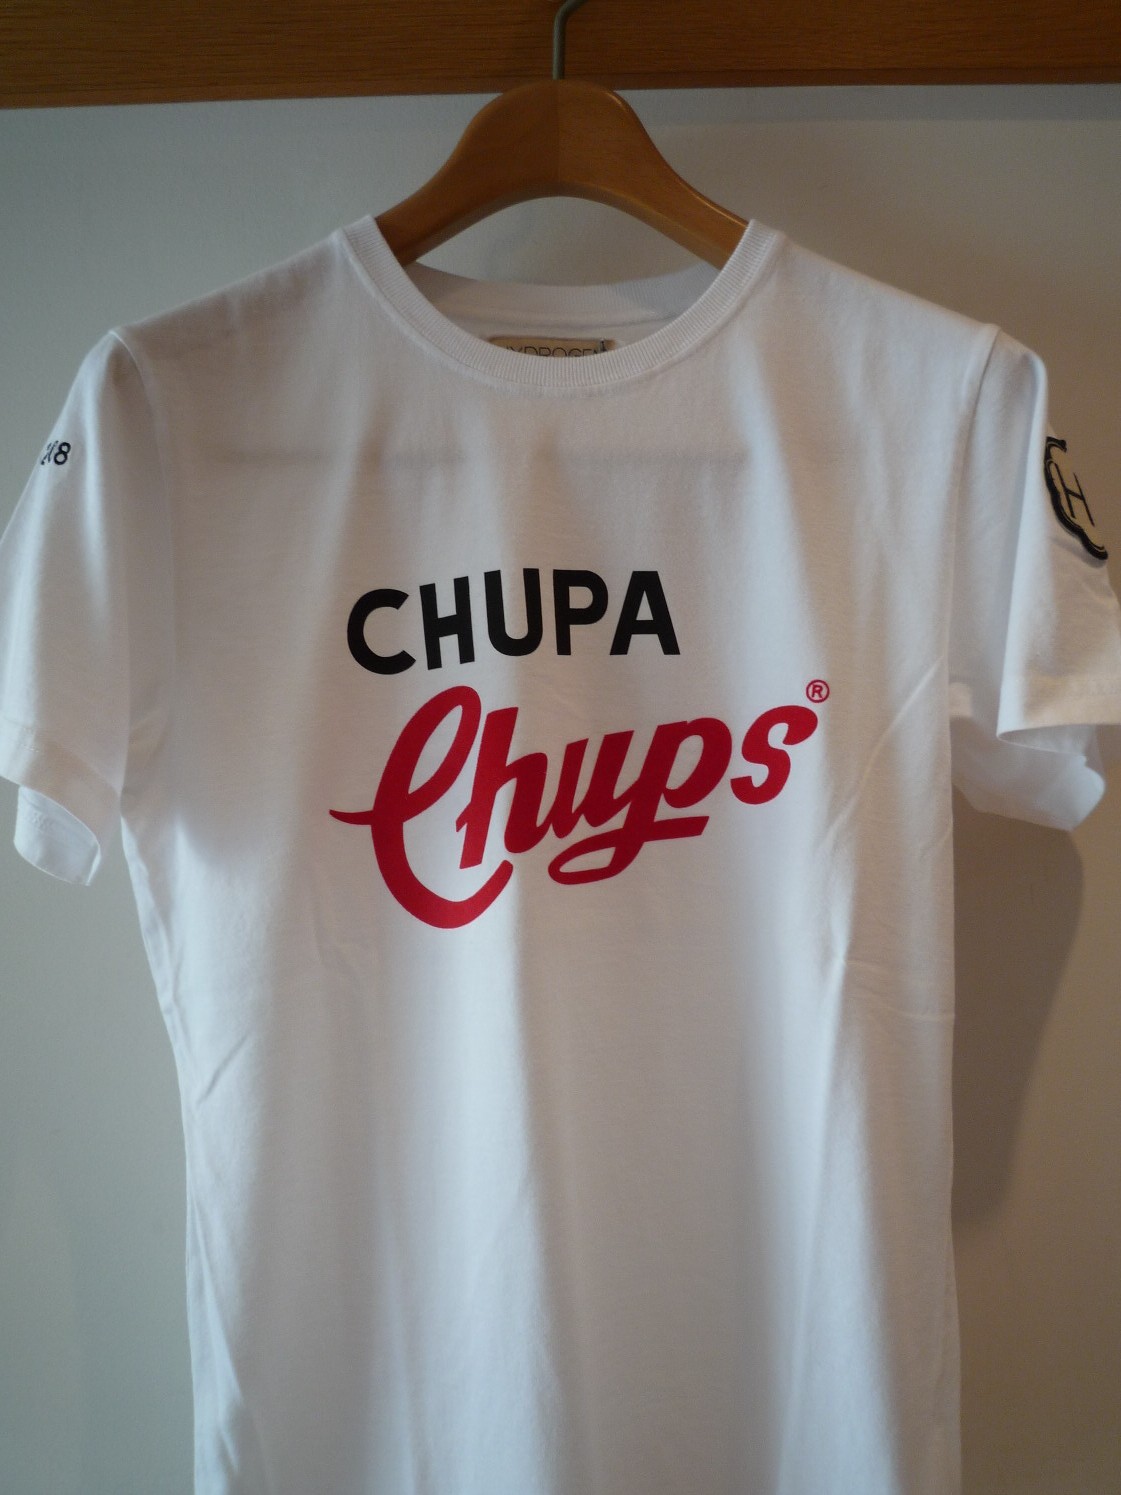 chupa